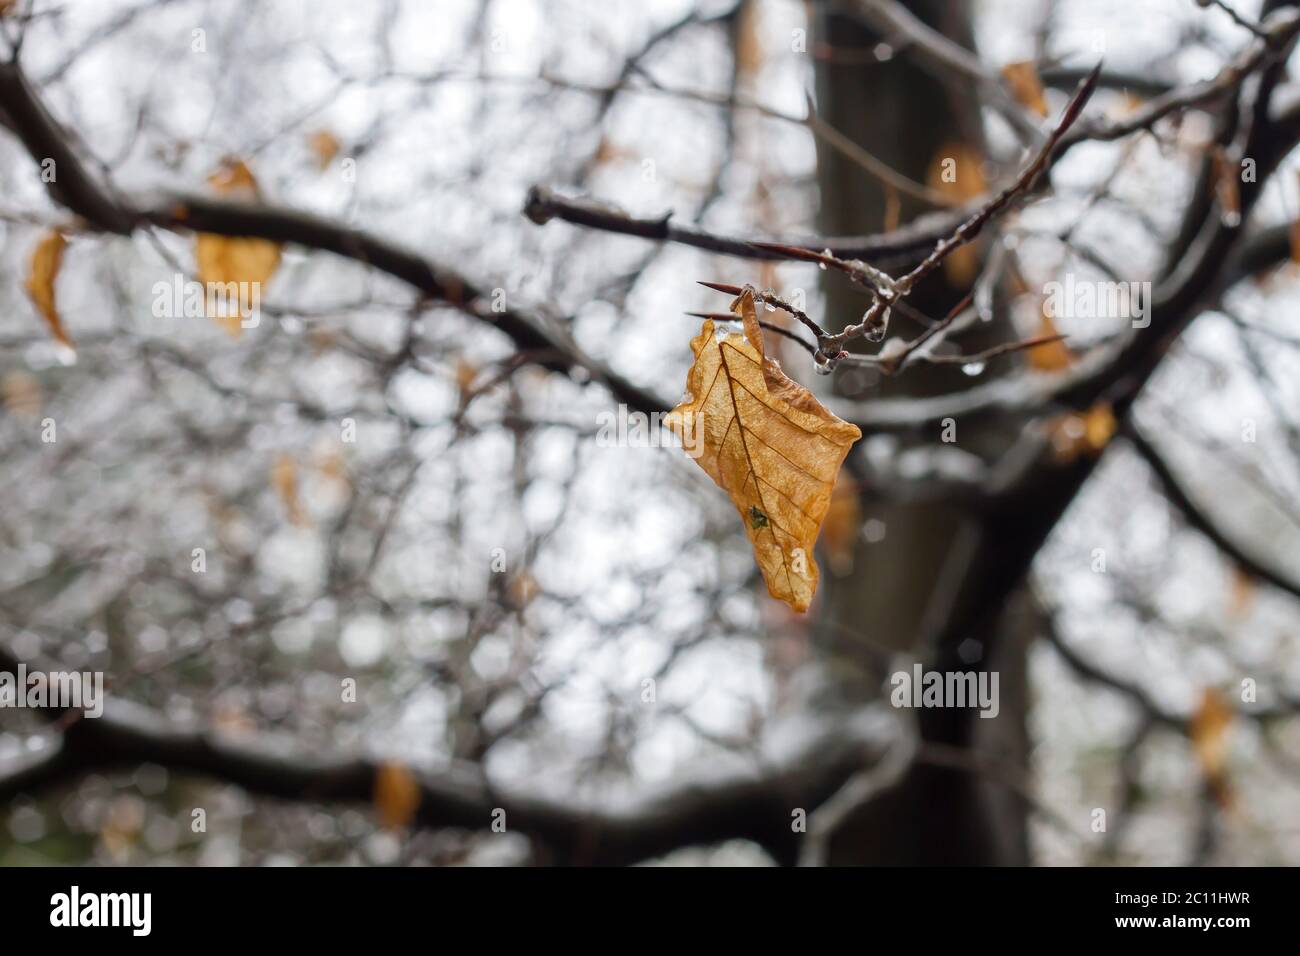 Beech tree deciduous wintry foliage Stock Photo